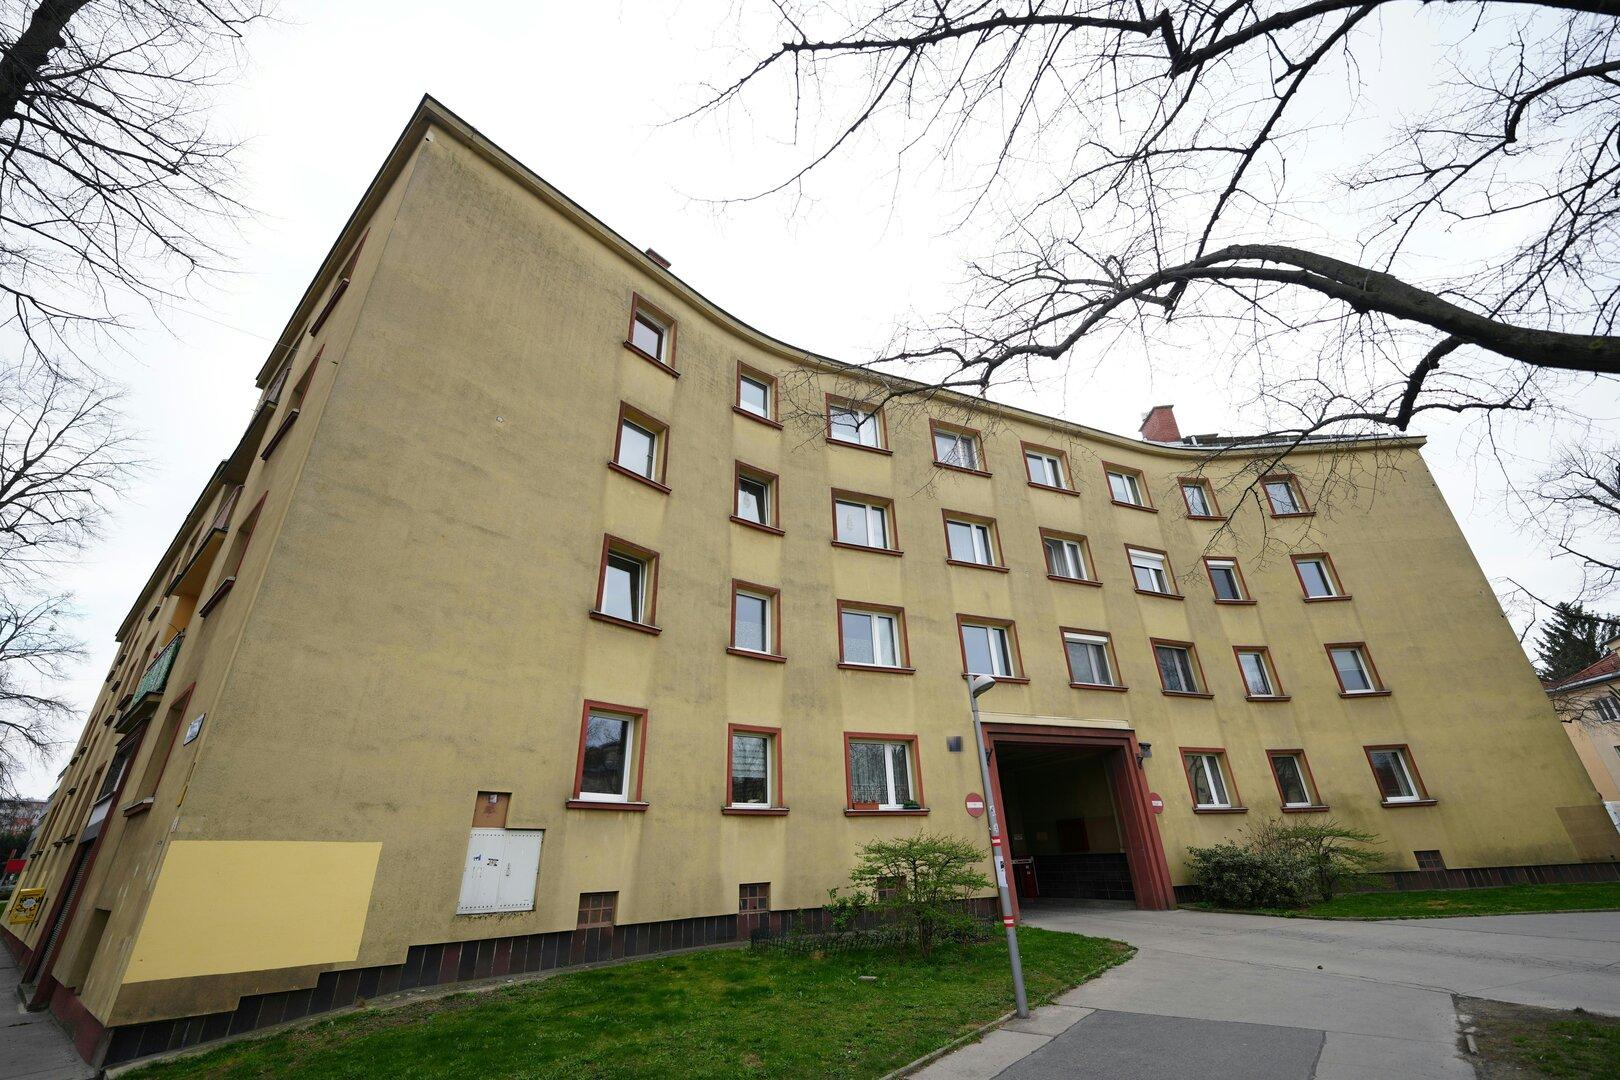 Tote 16-Jährige in Wien: Staatsanwaltschaft ermittelt wegen Missbrauchs